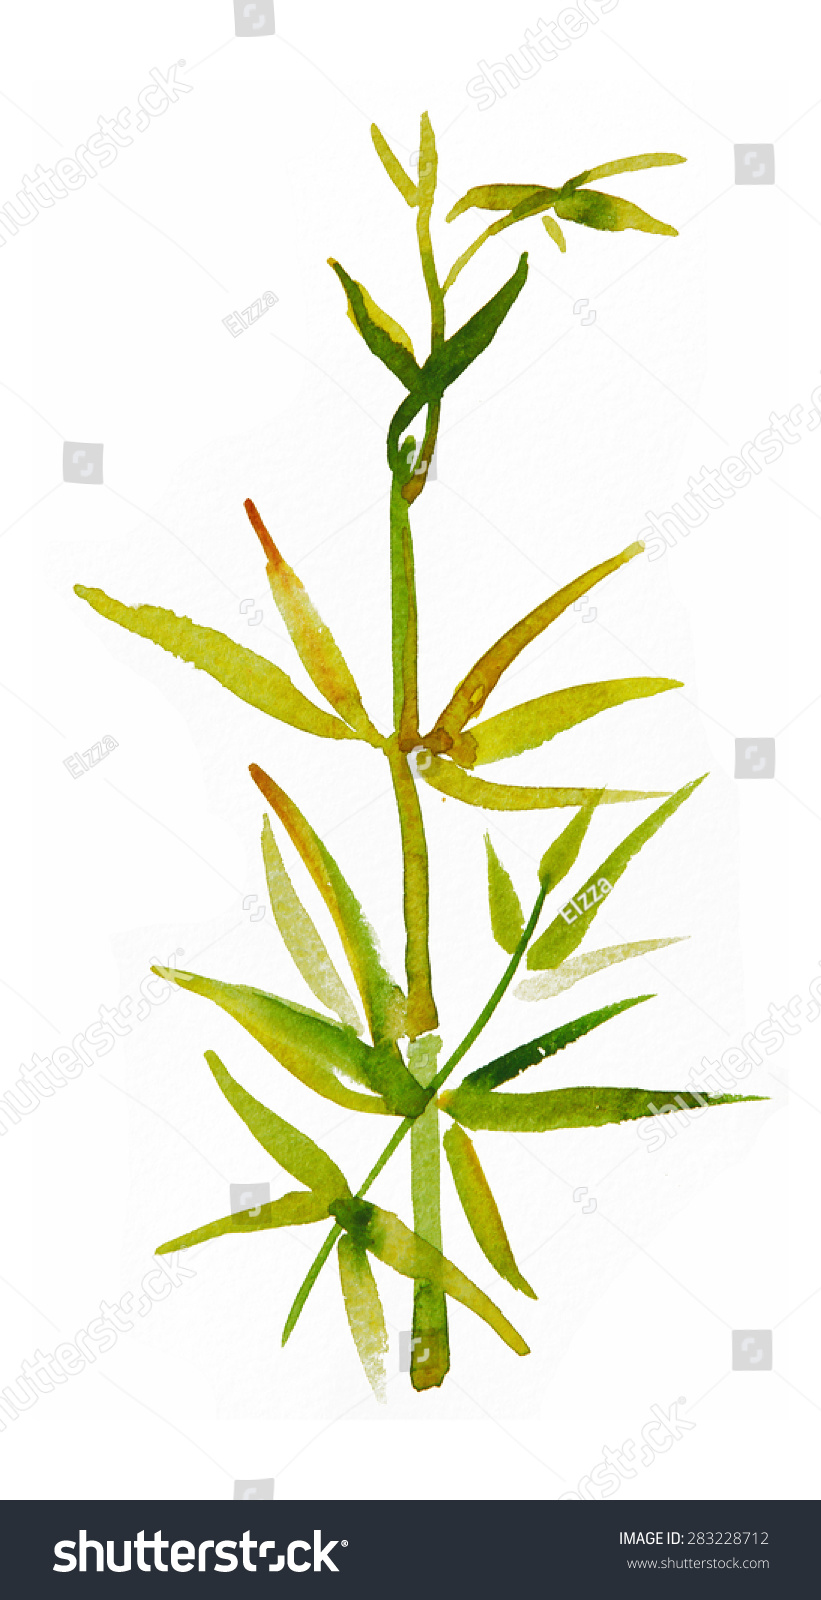 Edit Vectors Free Online - Bamboo leaves | Shutterstock Editor